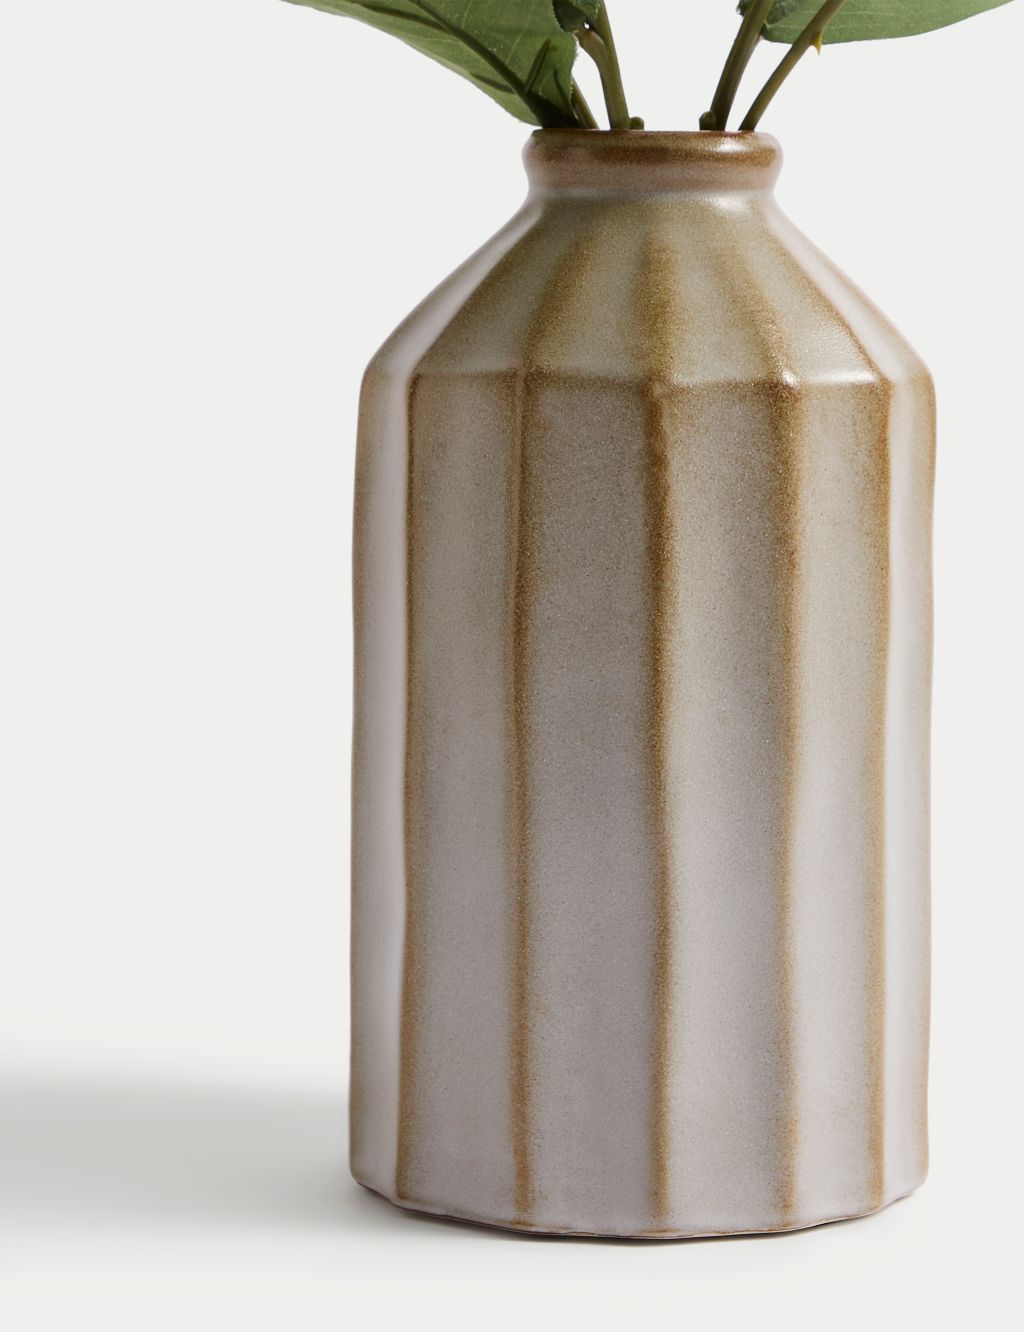 Artificial Cow Parsley in Ceramic Vase 2 of 4